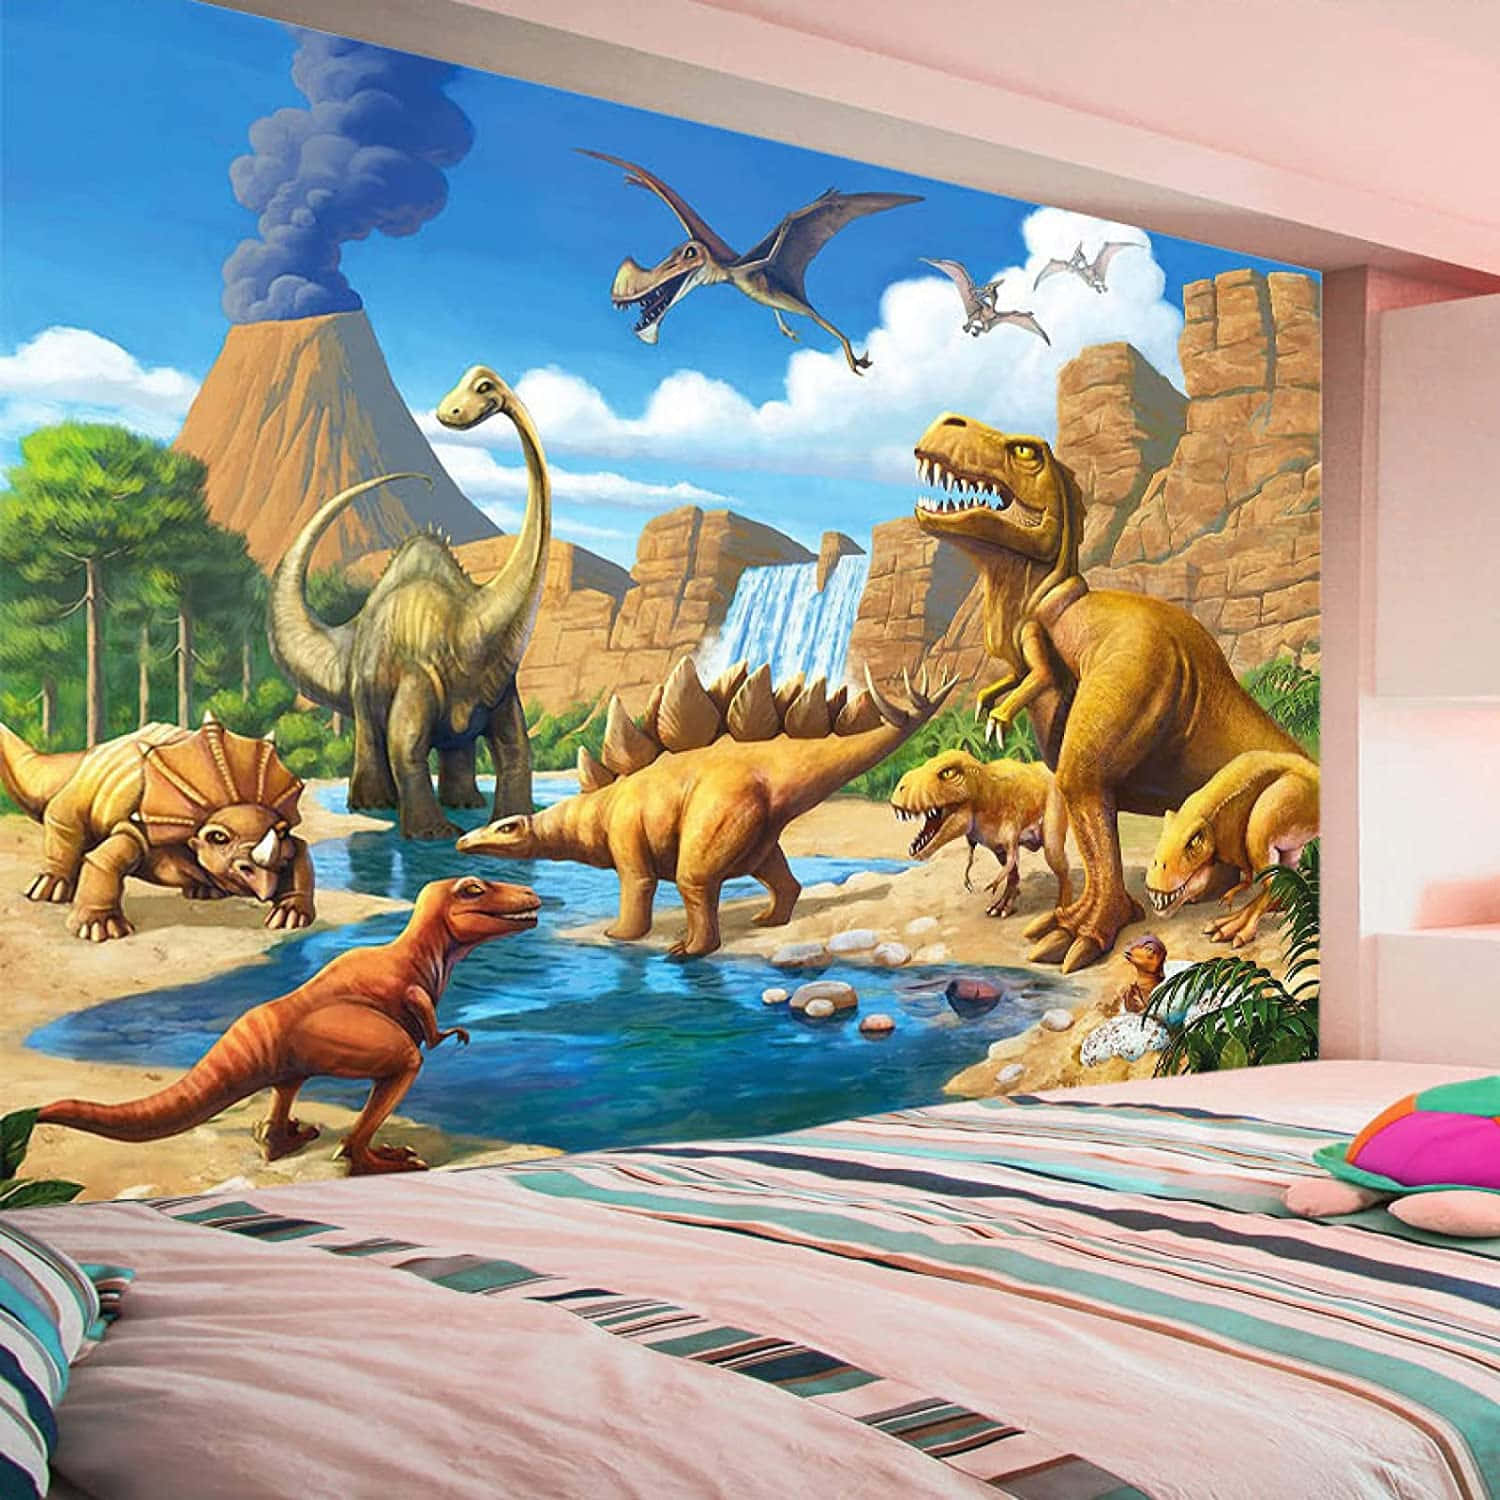 Imponentedinosaurio En 3d Recorriendo Un Exuberante Bosque Prehistórico. Fondo de pantalla